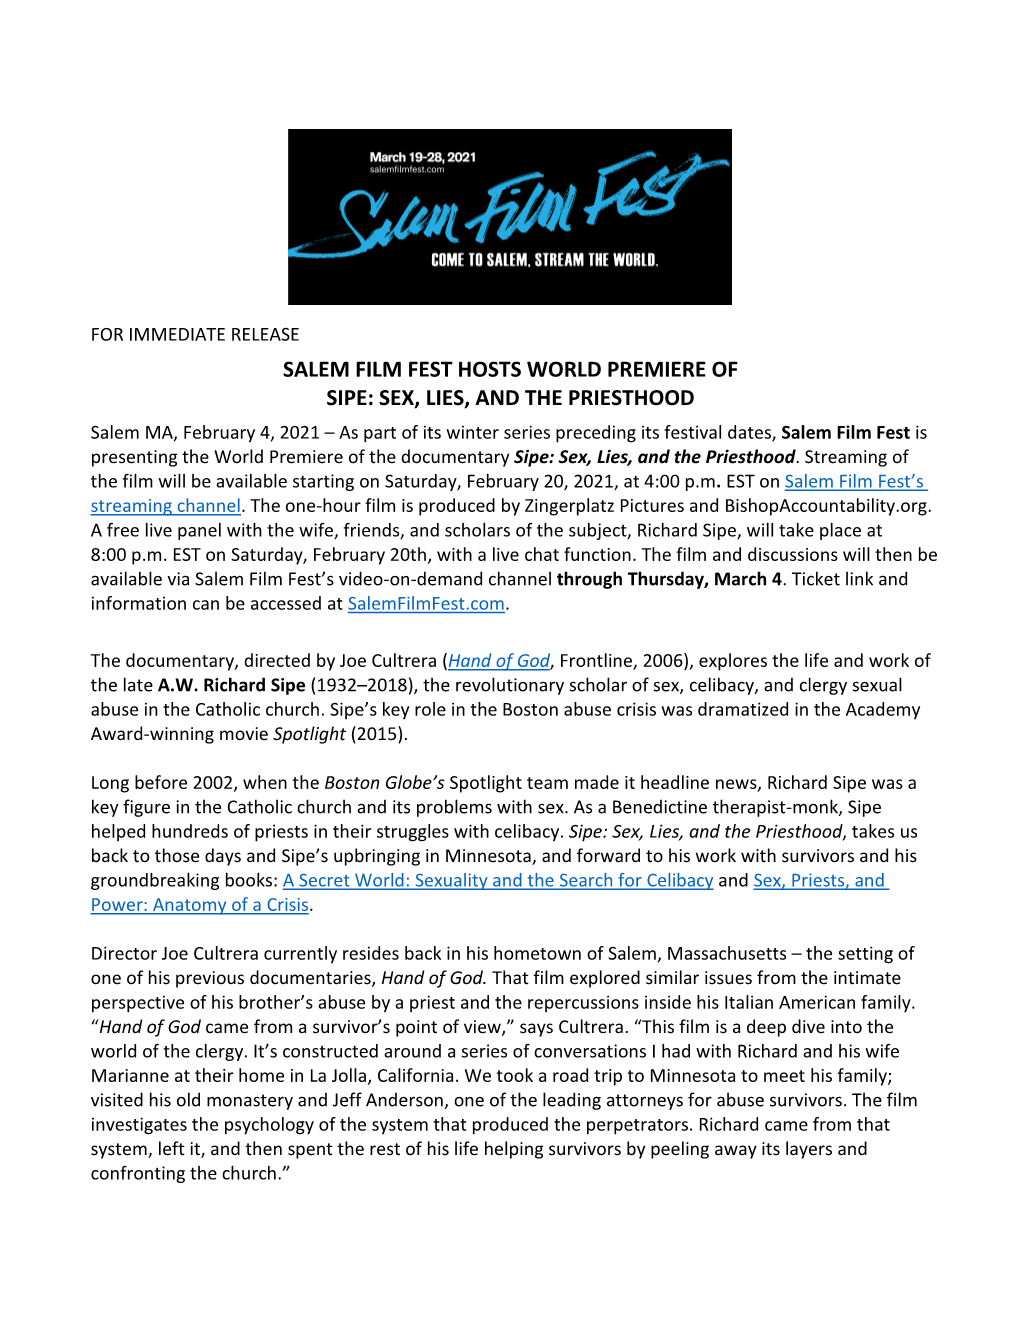 Salem Film Fest Hosts World Premiere